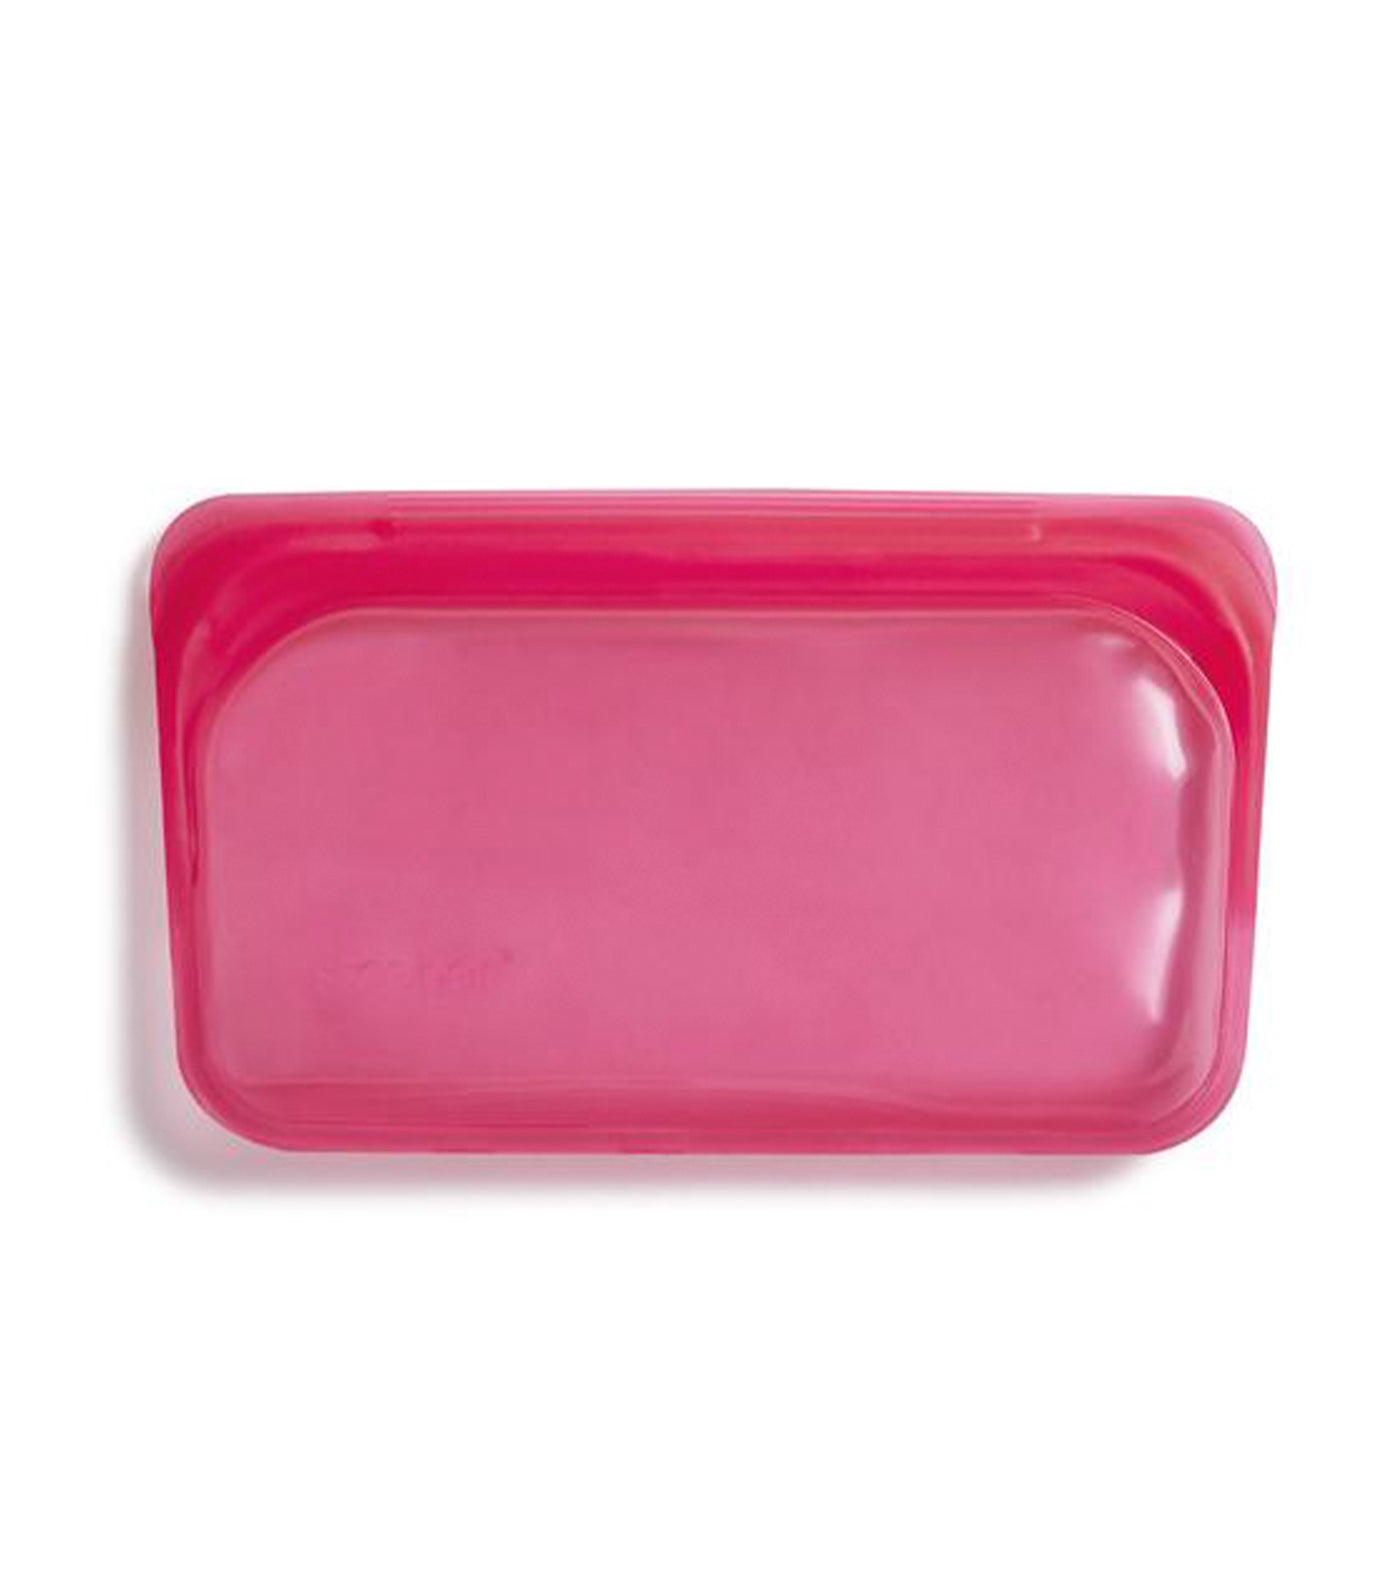 stasher reusable silicone snack bag - raspberry